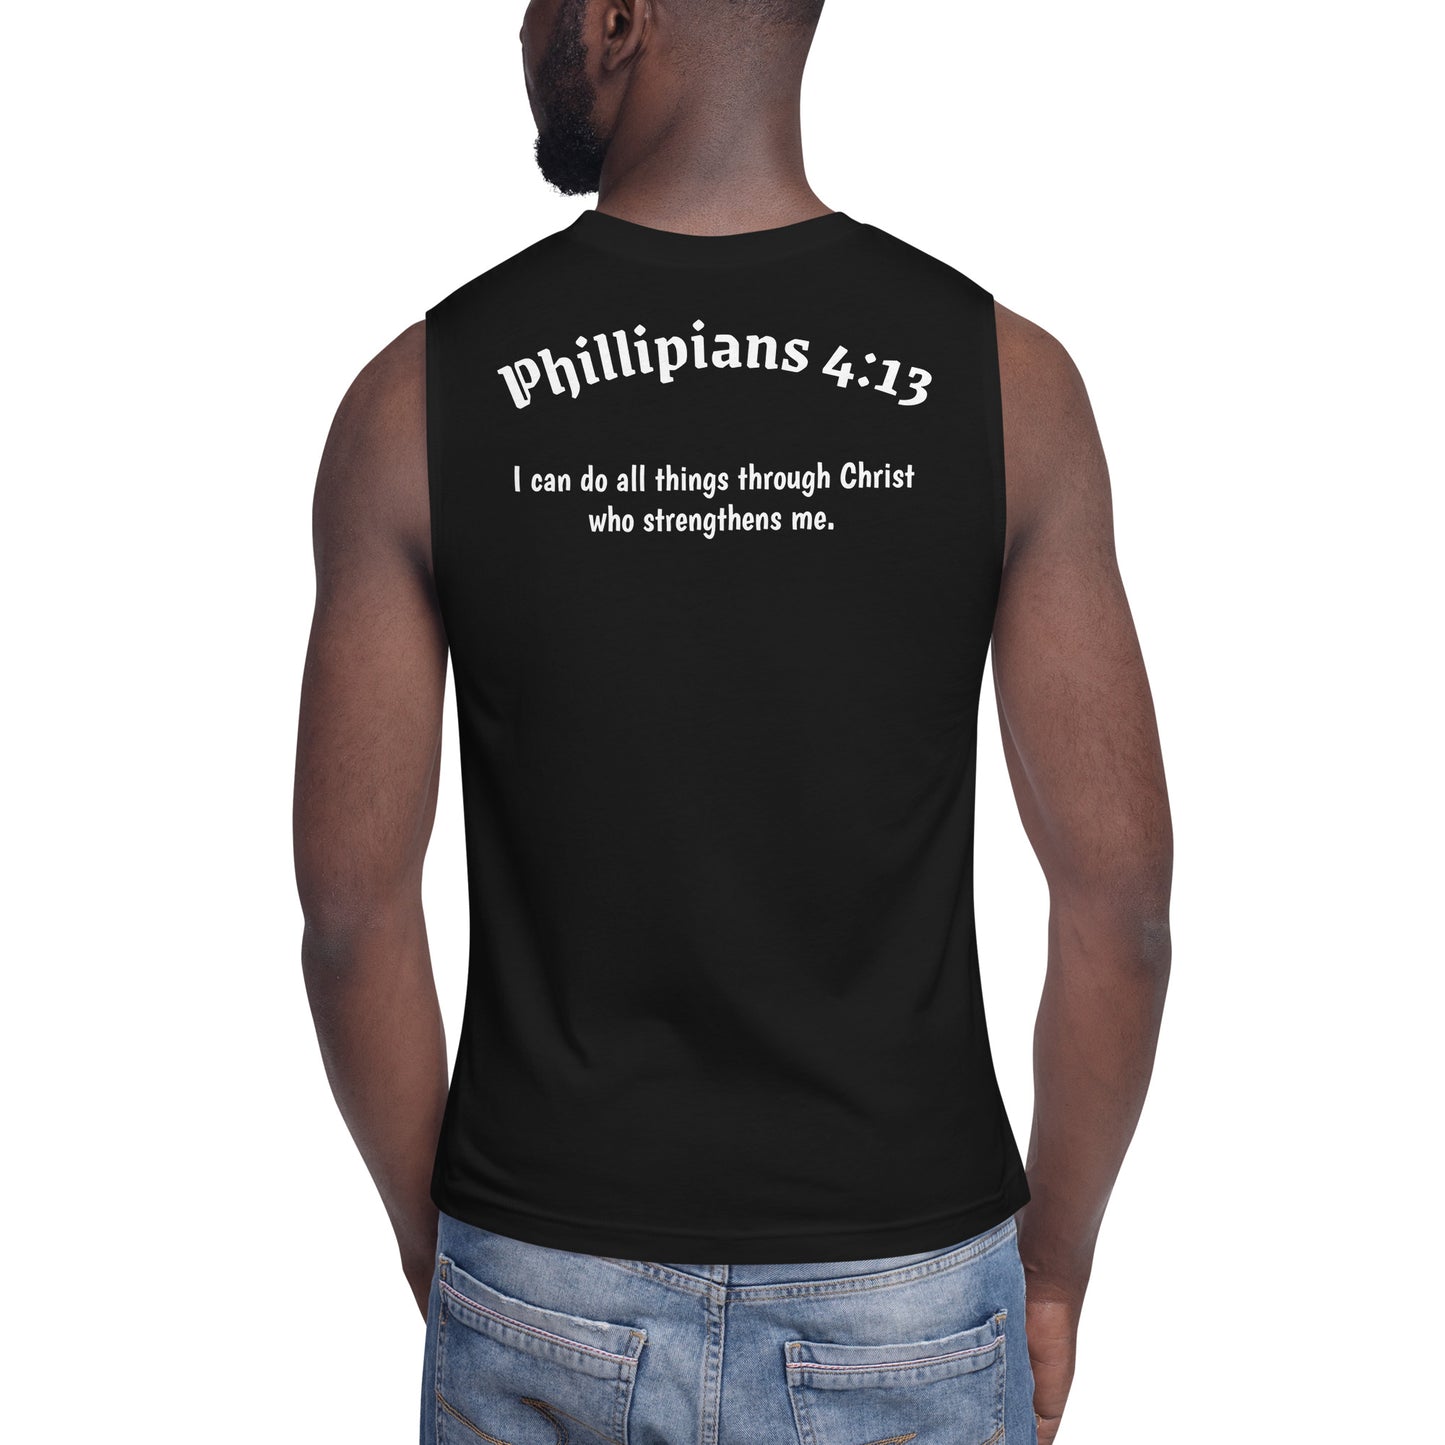 Phillipians 4:13 Men's Muscle Shirt